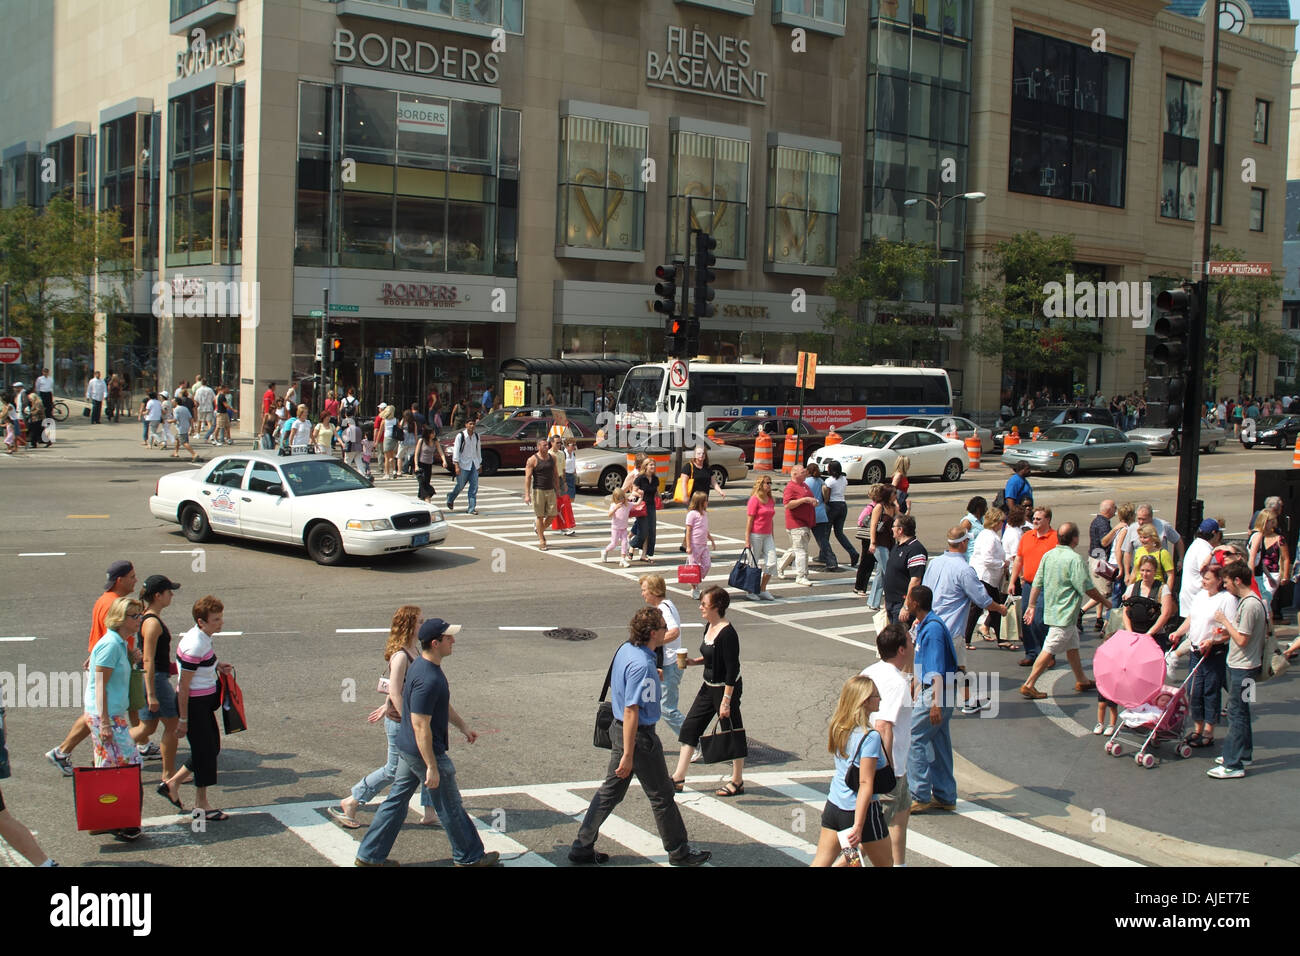 Pedestrians on Michigan Ave city center Chicago Illinois USA Stock Photo